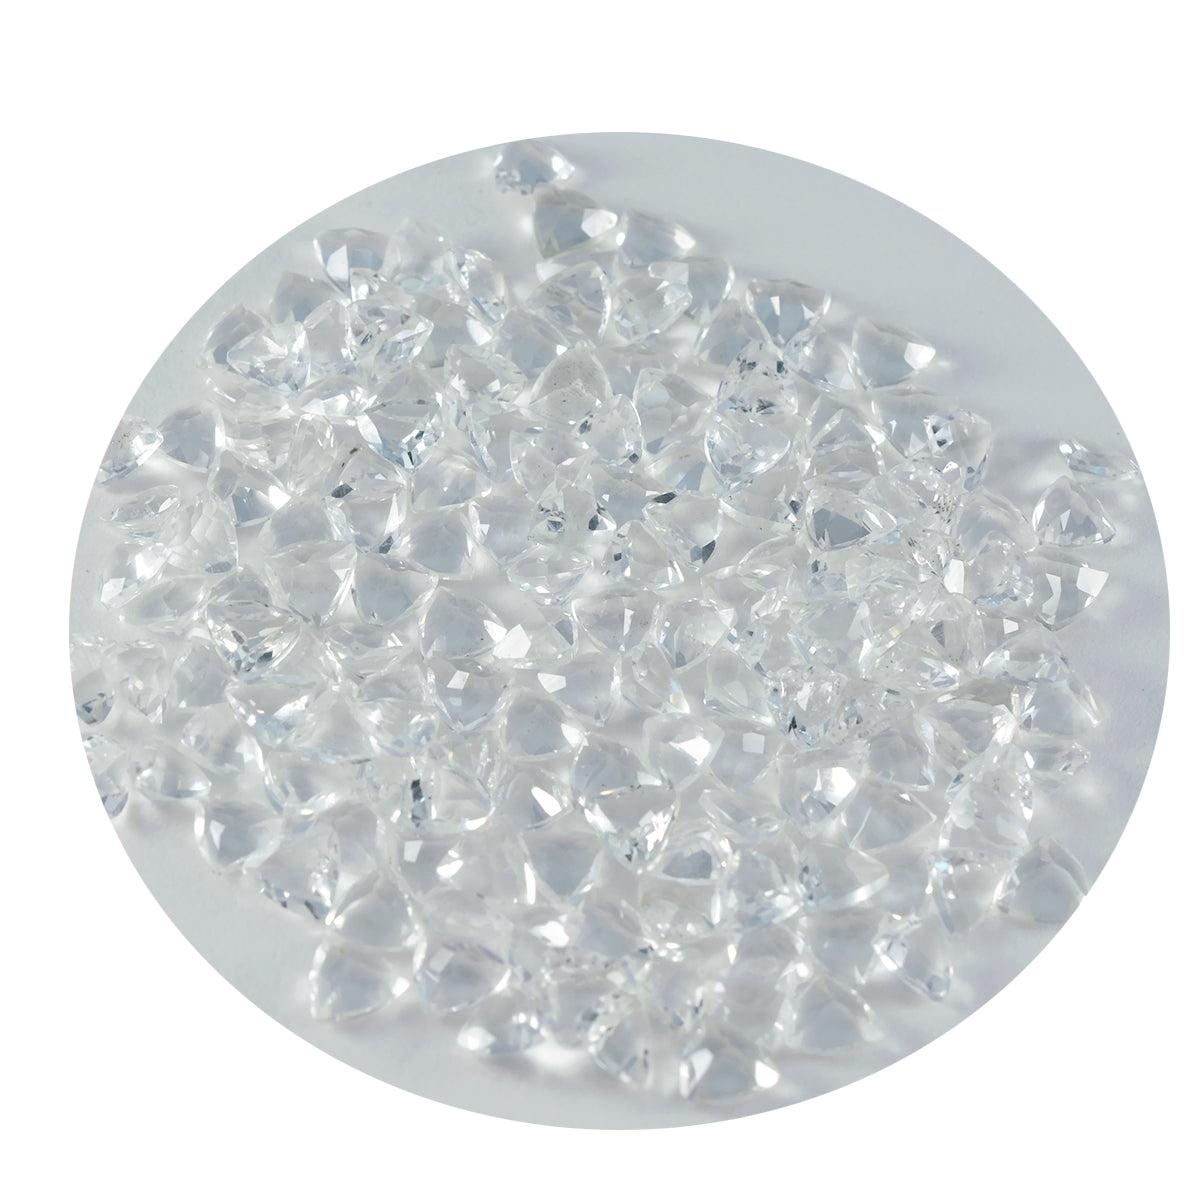 Riyogems 1PC White Crystal Quartz Faceted 5x5 mm Trillion Shape wonderful Quality Gems